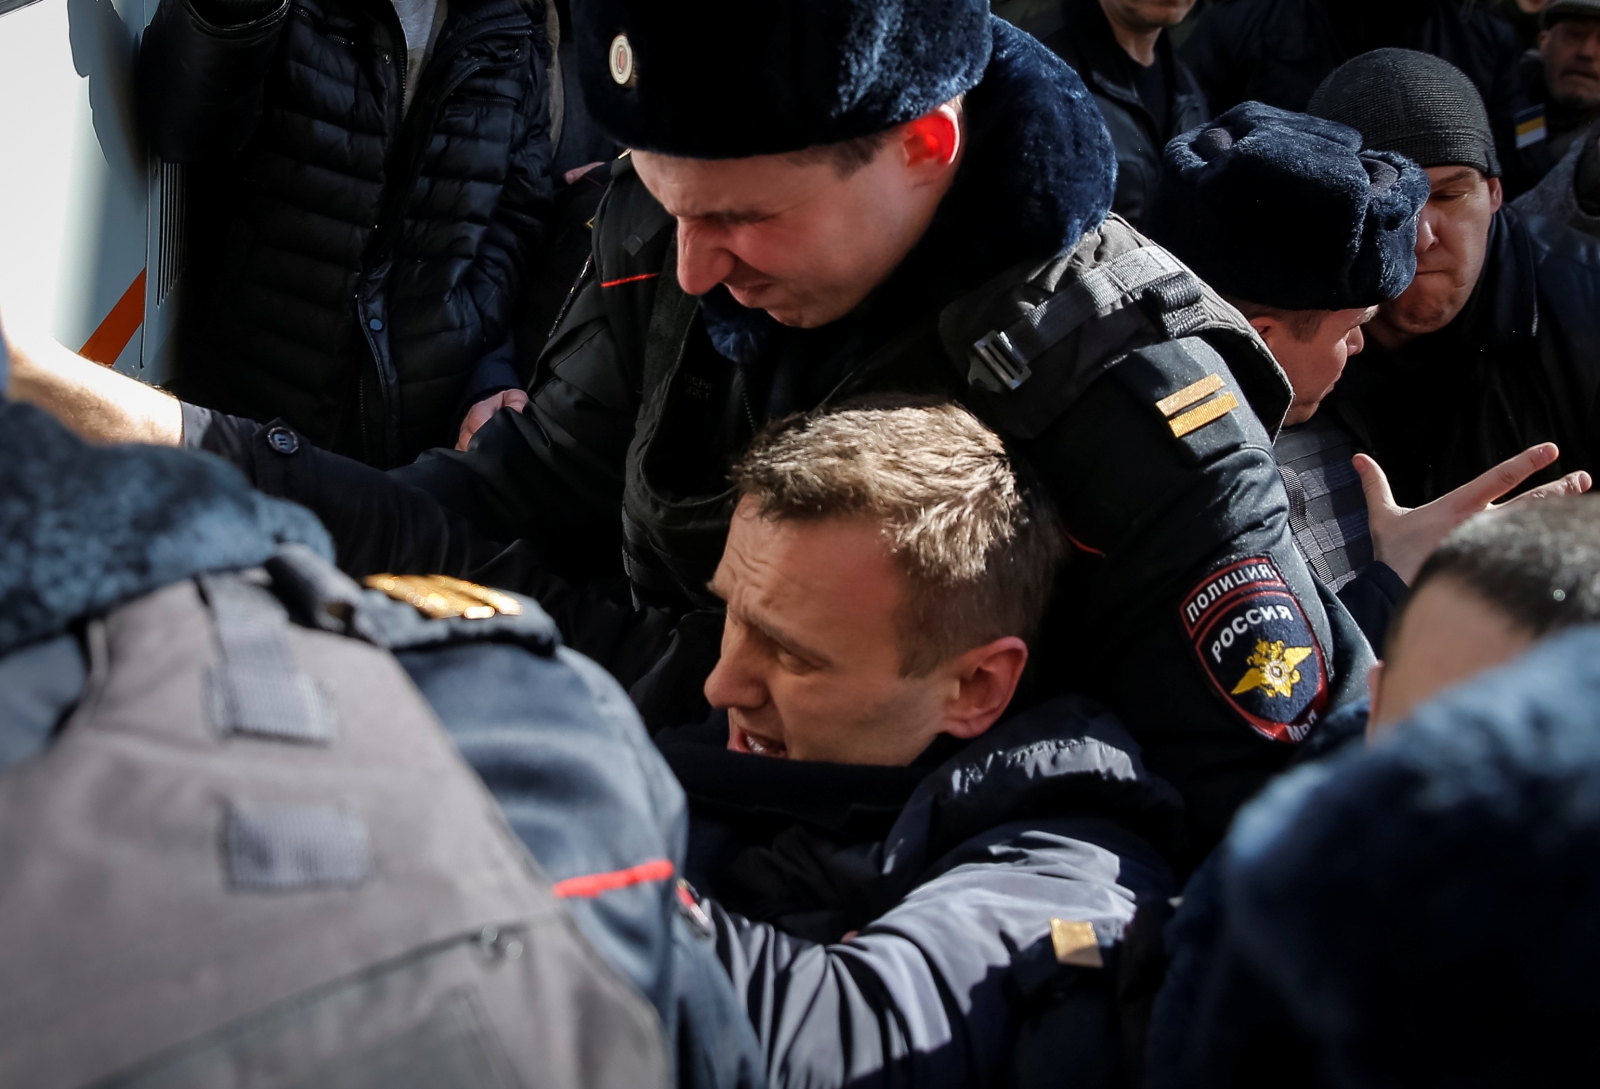 Putin critic Alexei Navalny arrested at anti-corruption